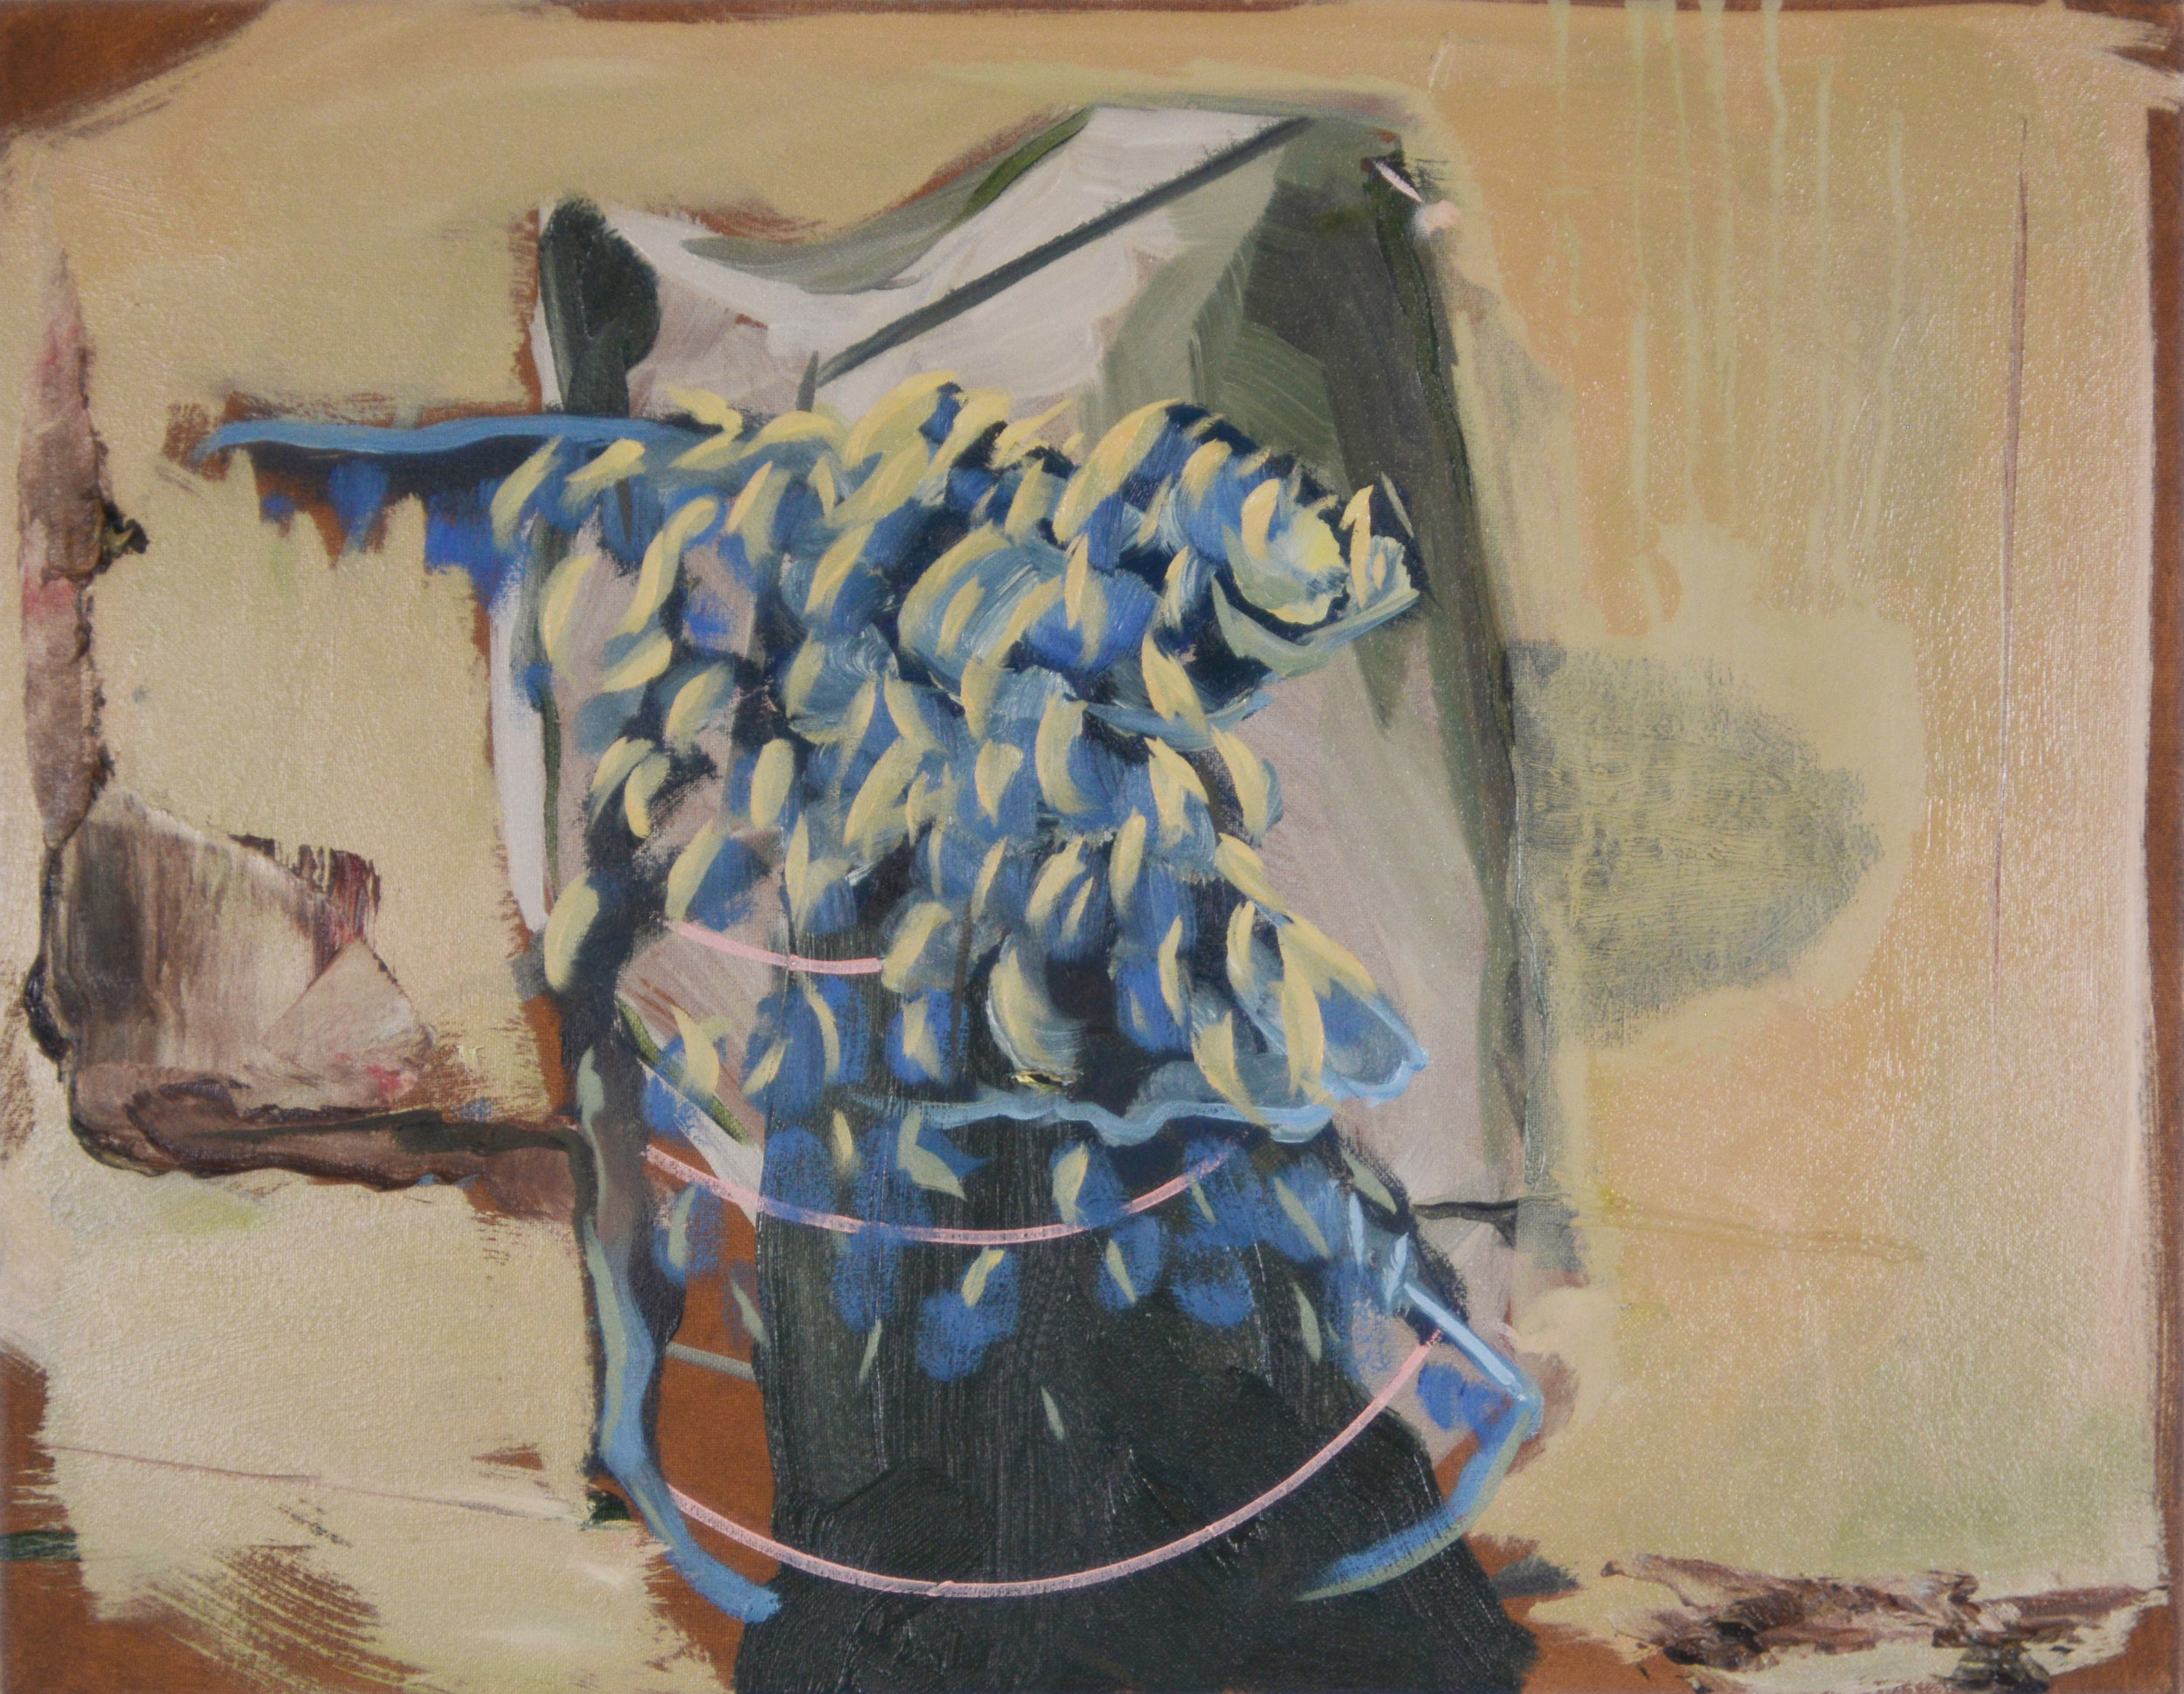 Armature, 2013, Oil on canva, 30 x 40 cm